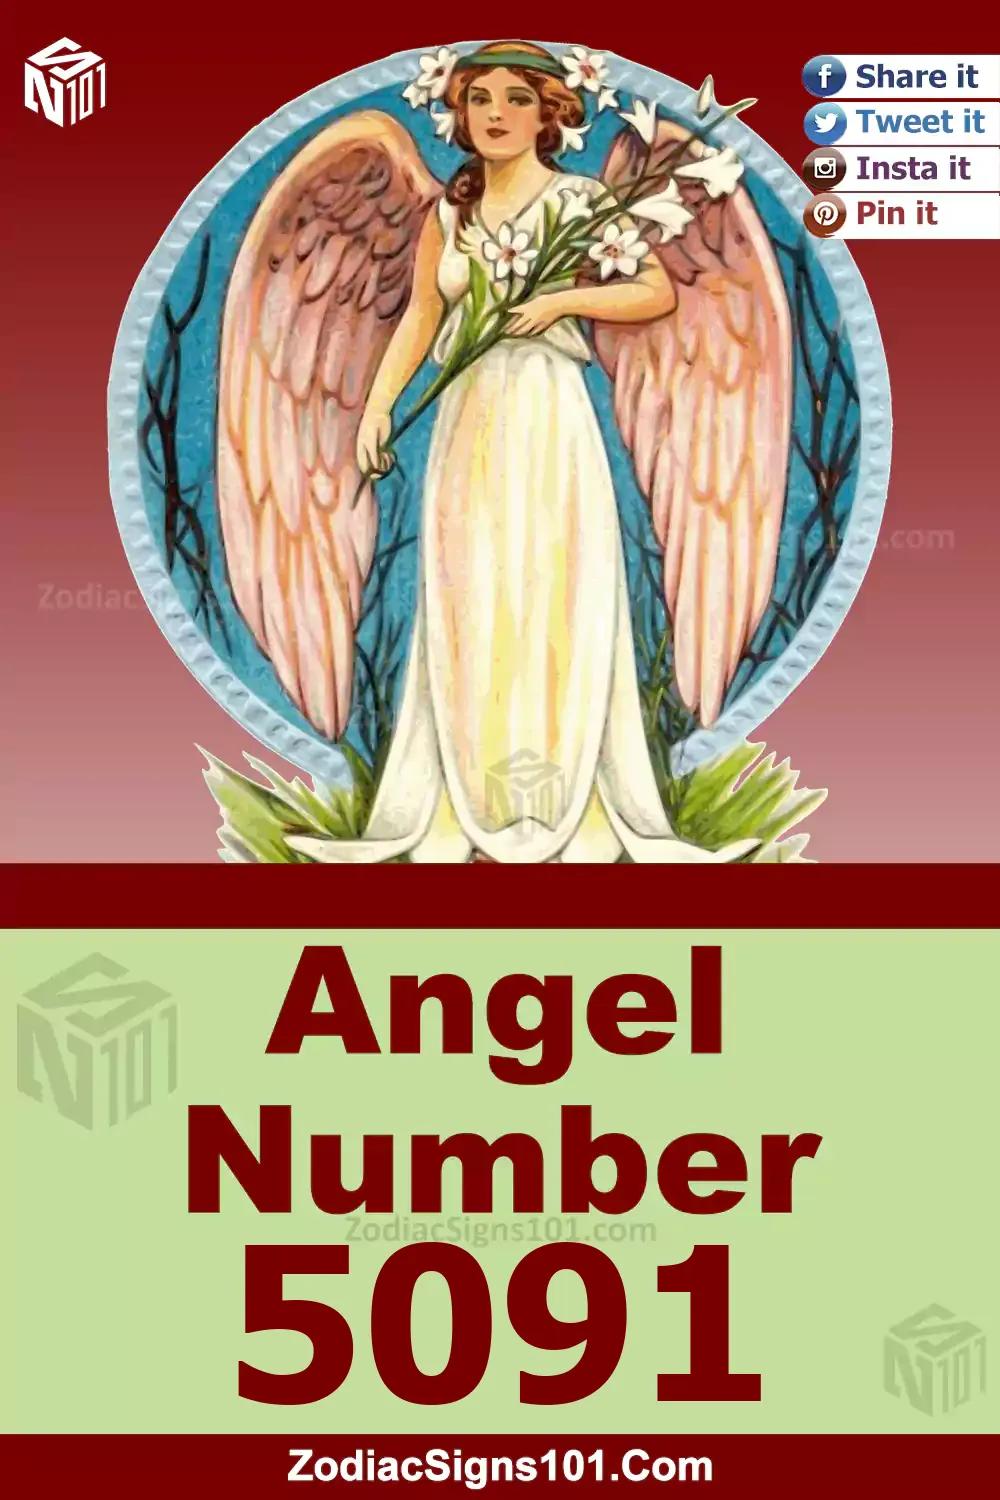 5091-Angel-Number-Meaning.jpg